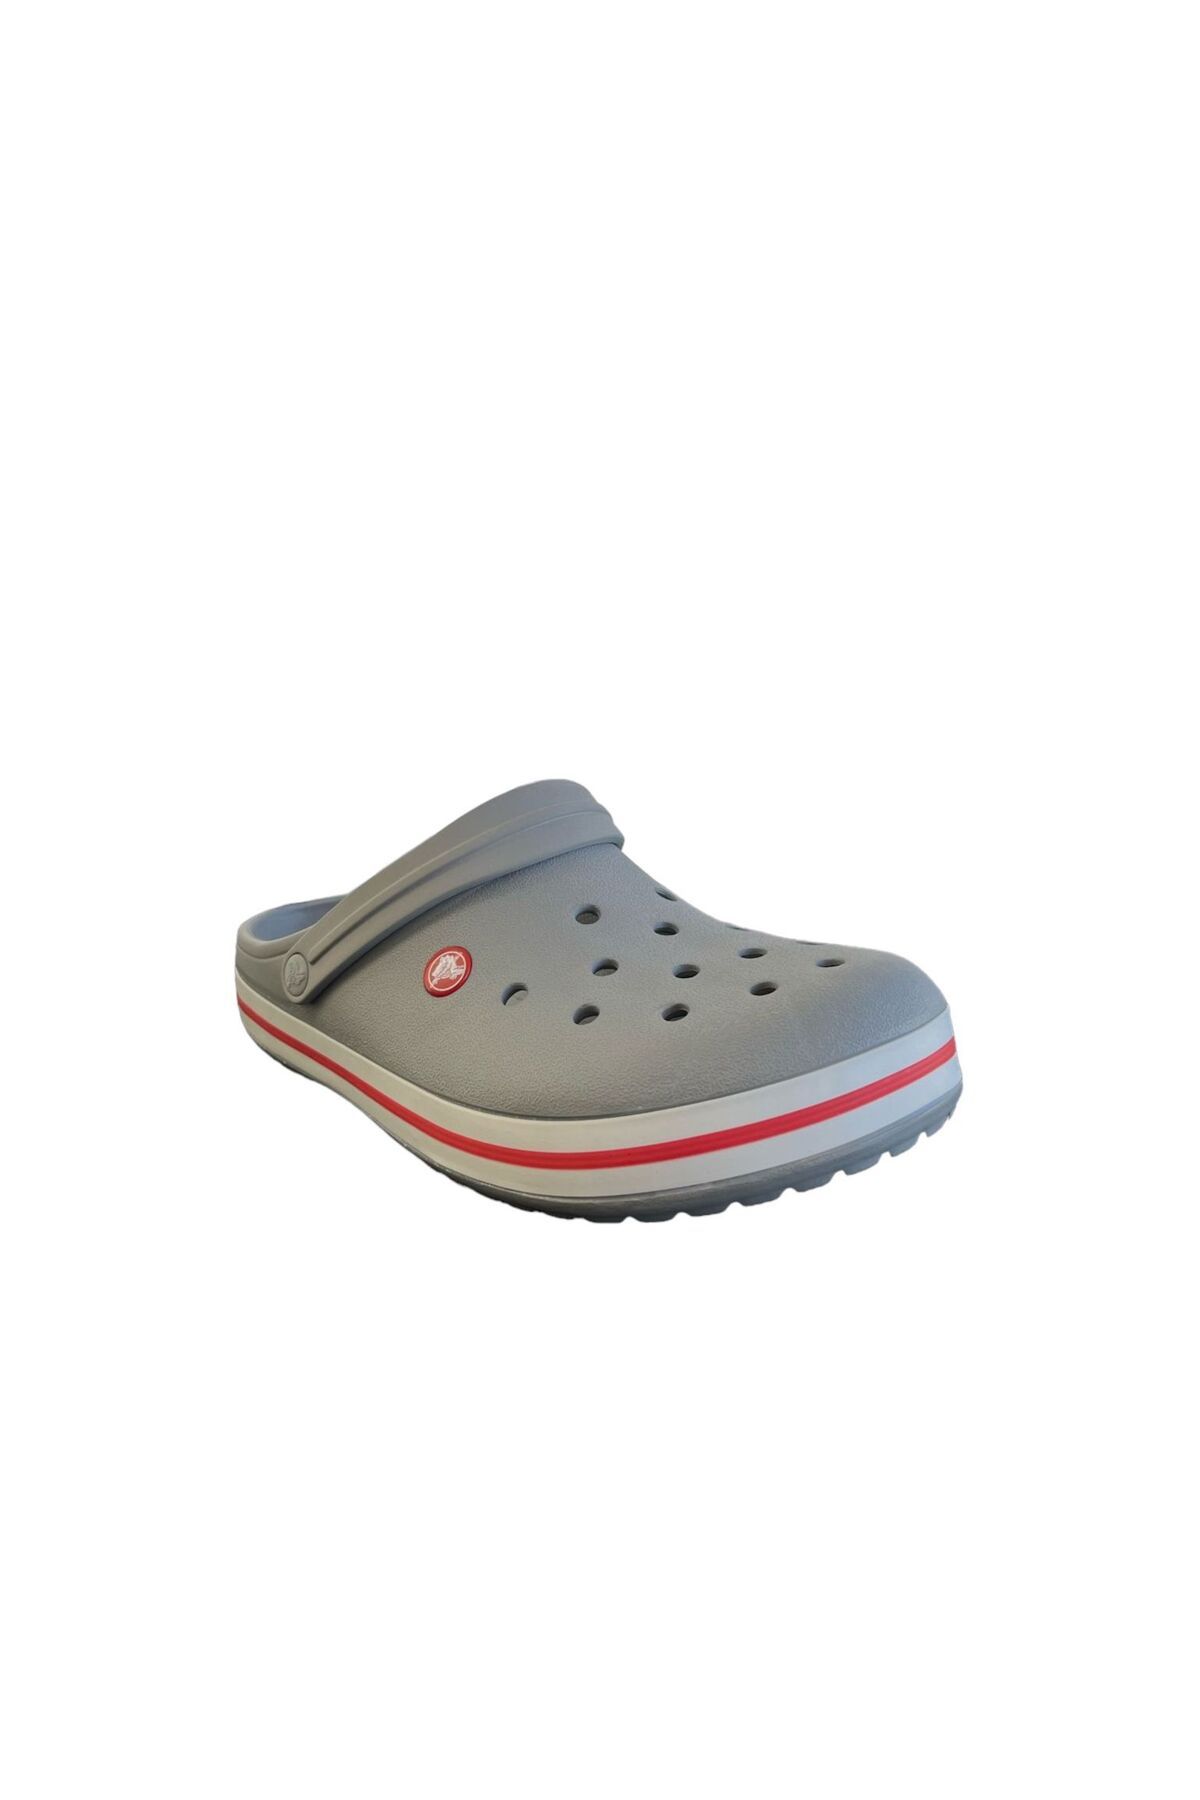 Crocs crocband خاکستری/قرمز